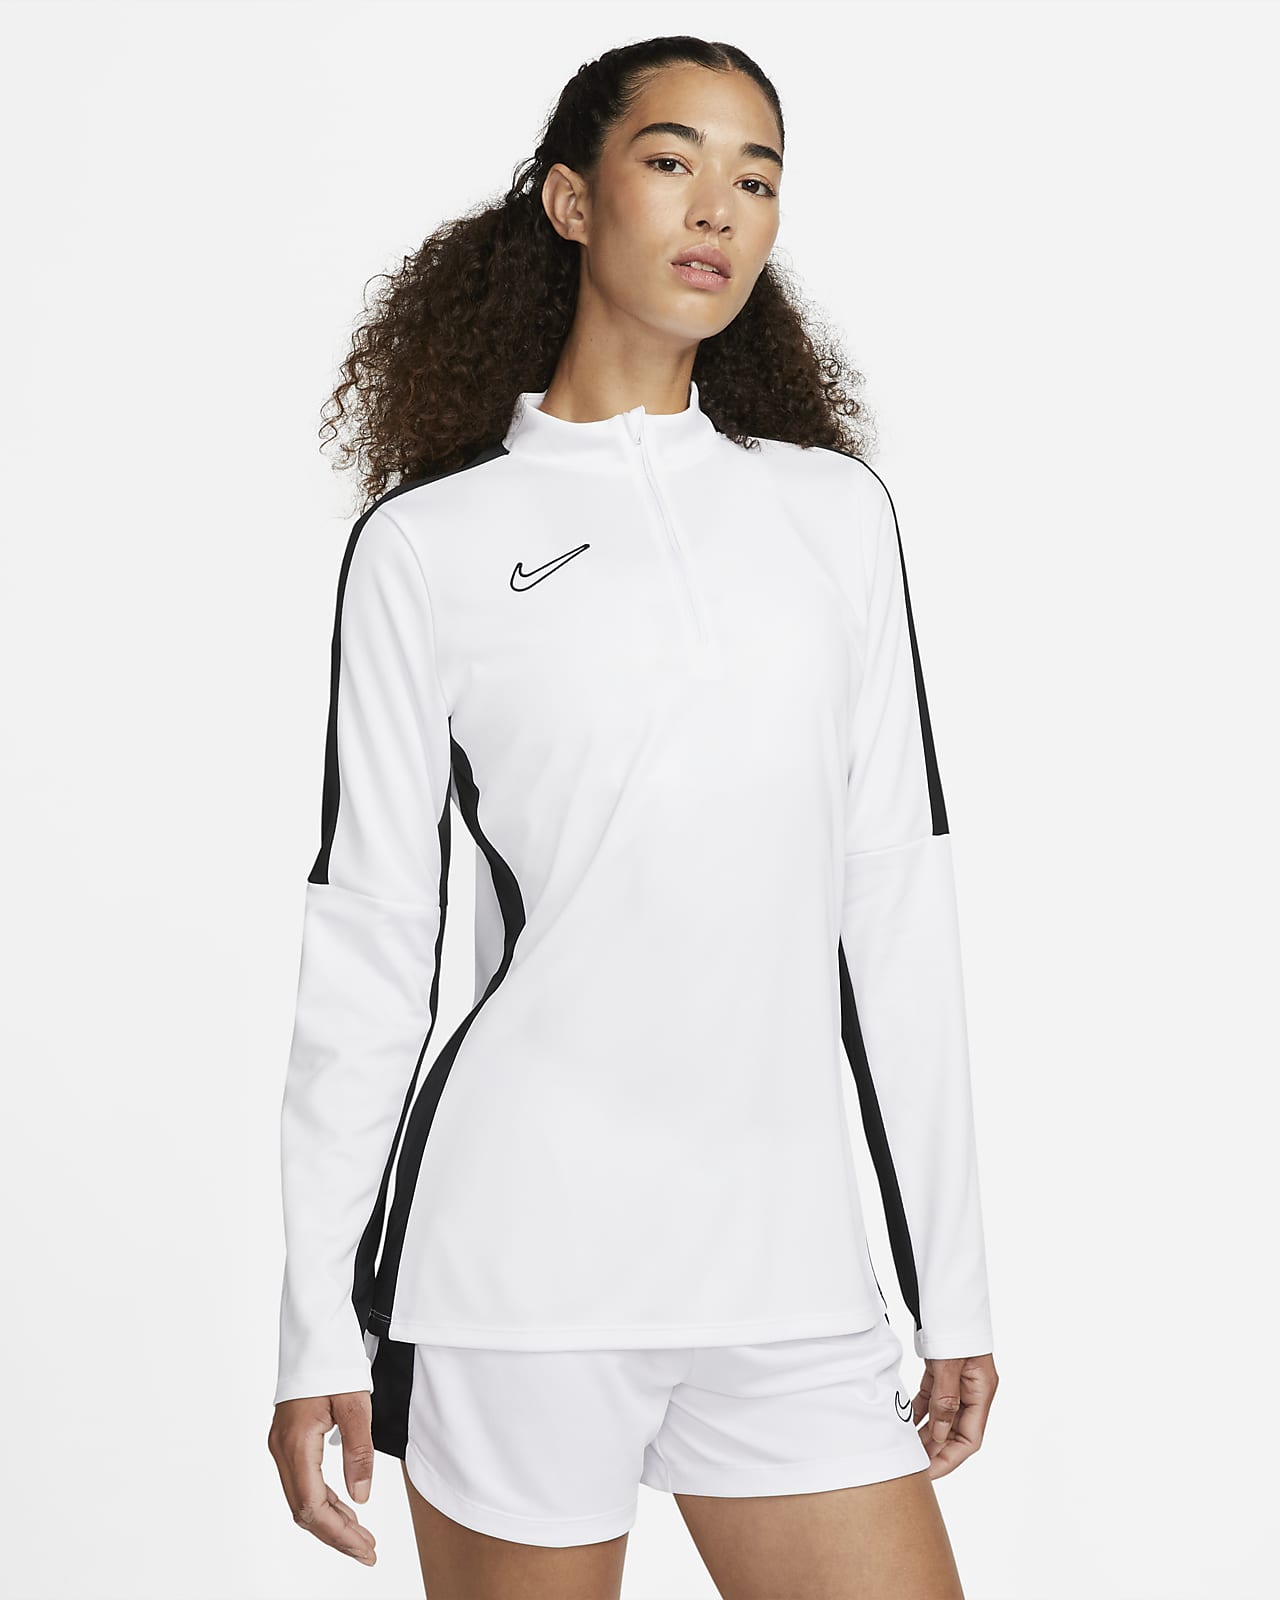 Nike Dri-FIT Academy Kadın Futbol Antrenman Üstü